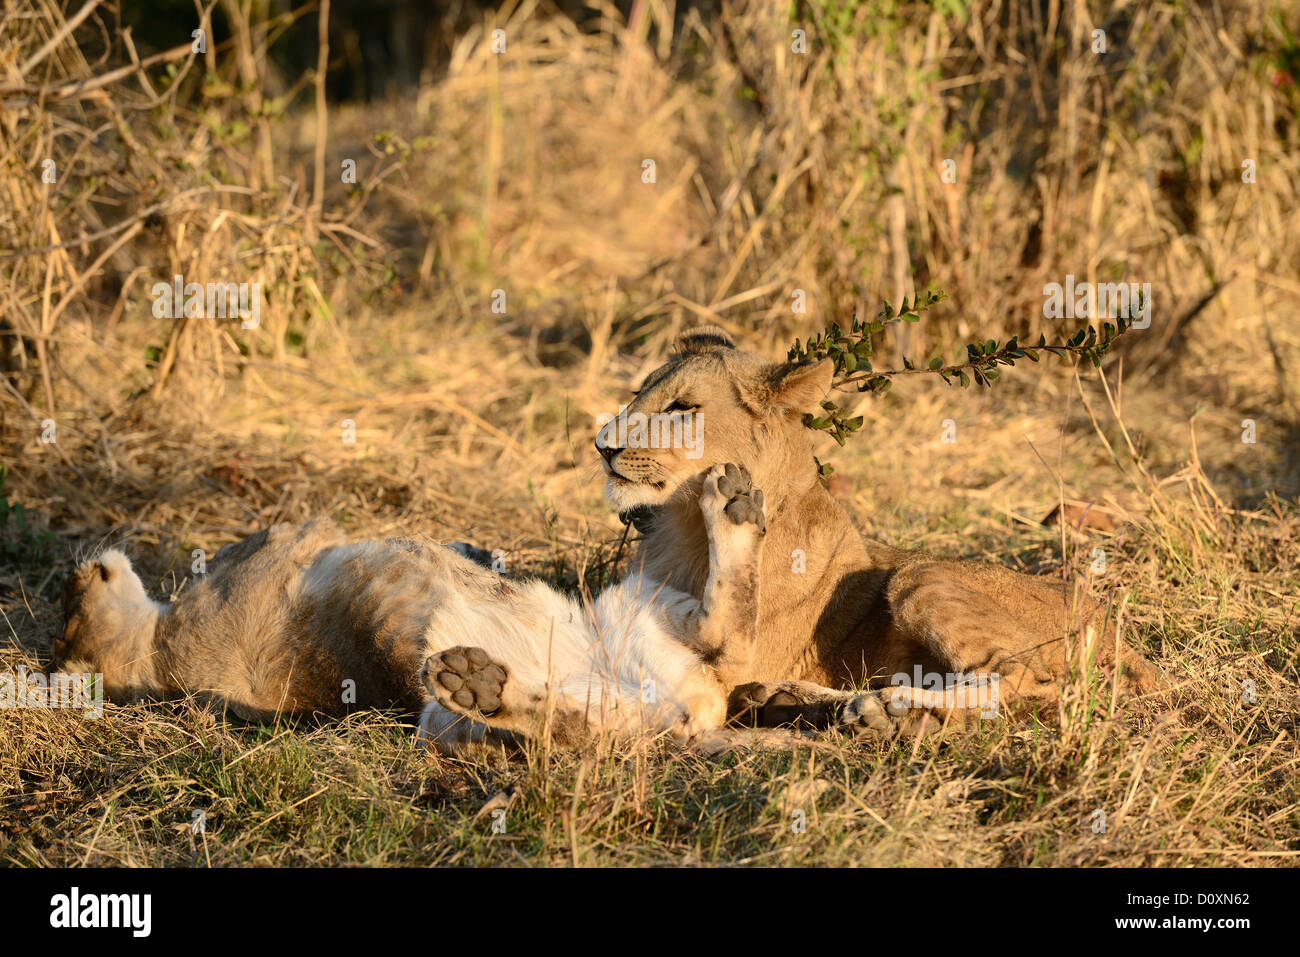 Africa, Zimbabwe, lion, animal, play, leo, wildlife, safari Stock Photo